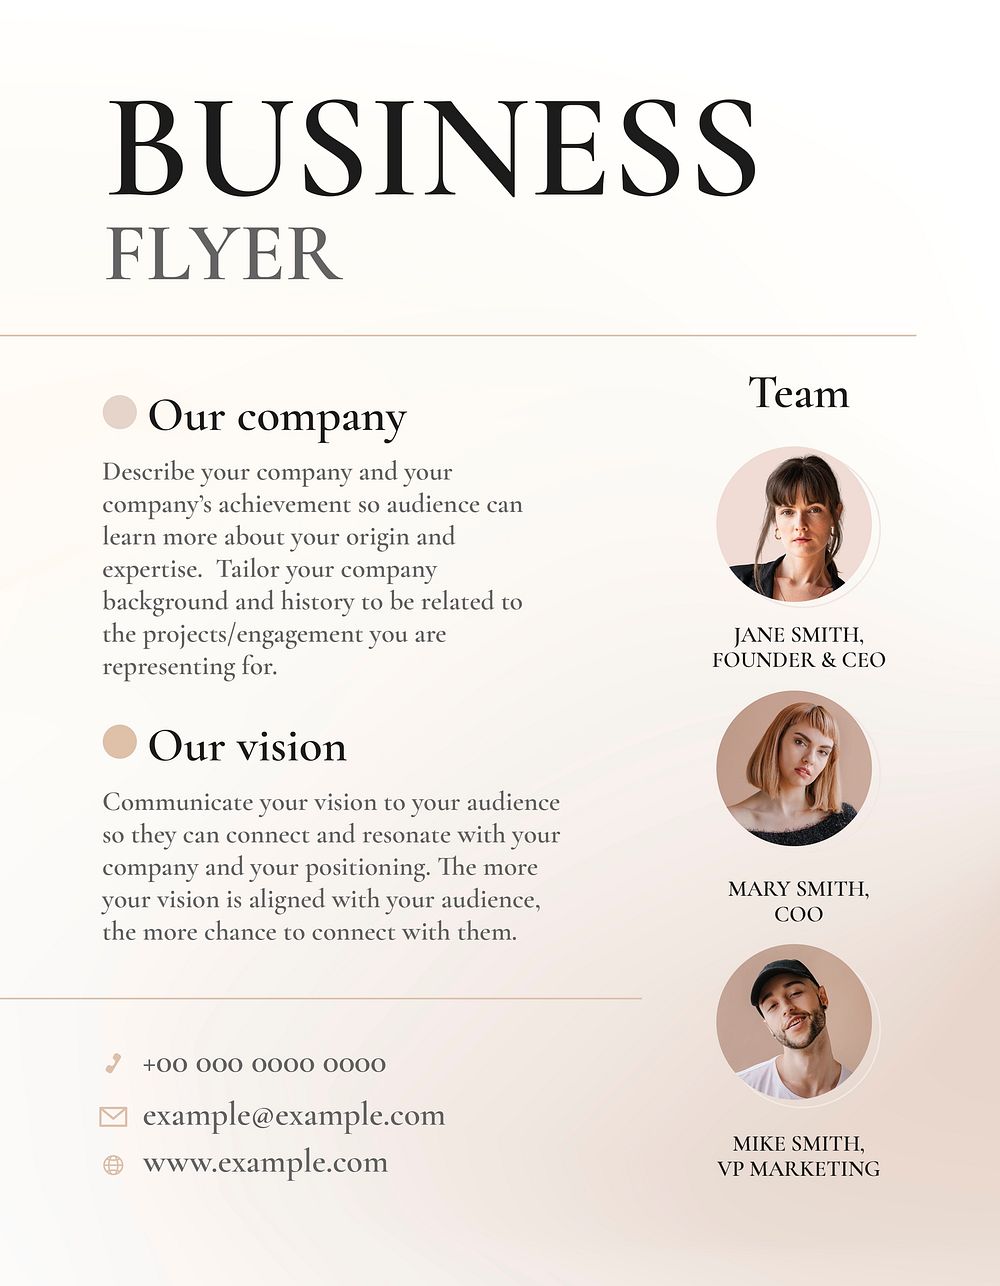 Feminine business flyer template psd for beauty brand